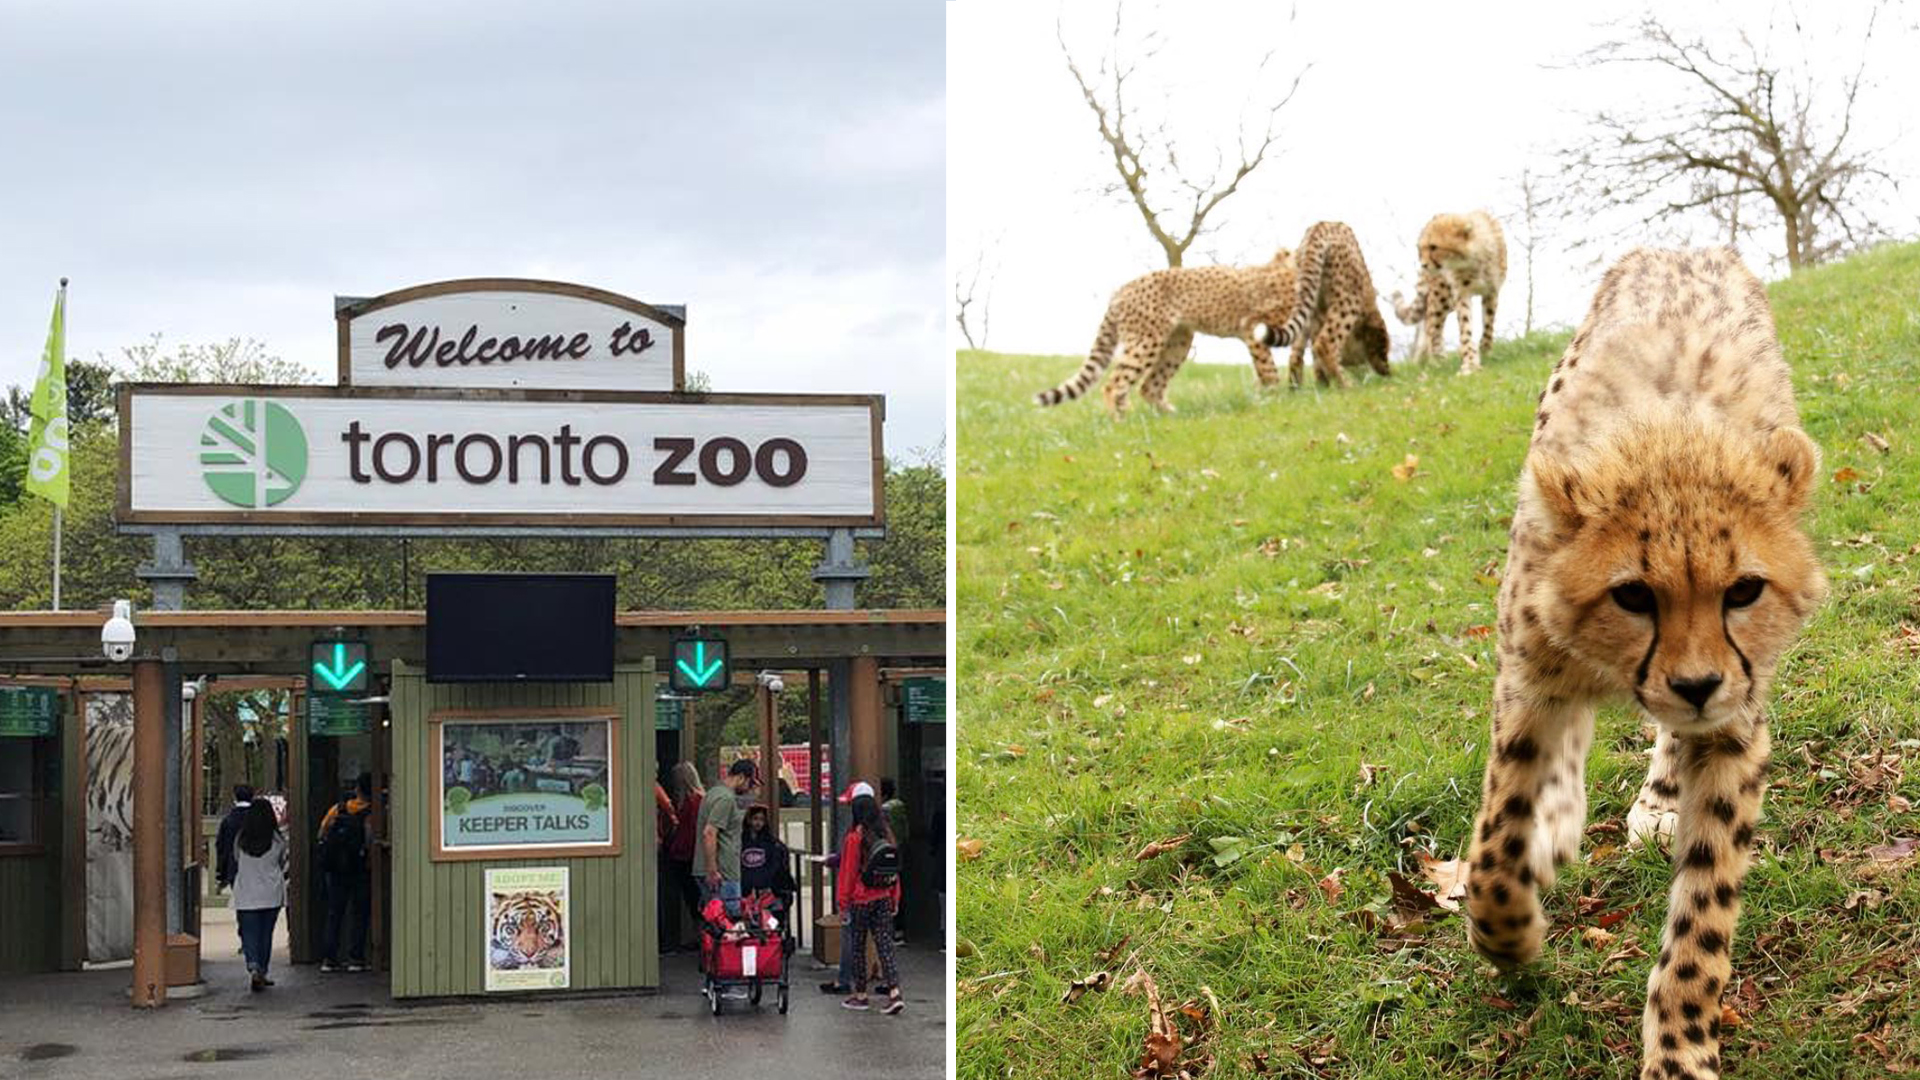 The Toronto Zoo's New Drive-Thru Safari Opens This Weekend